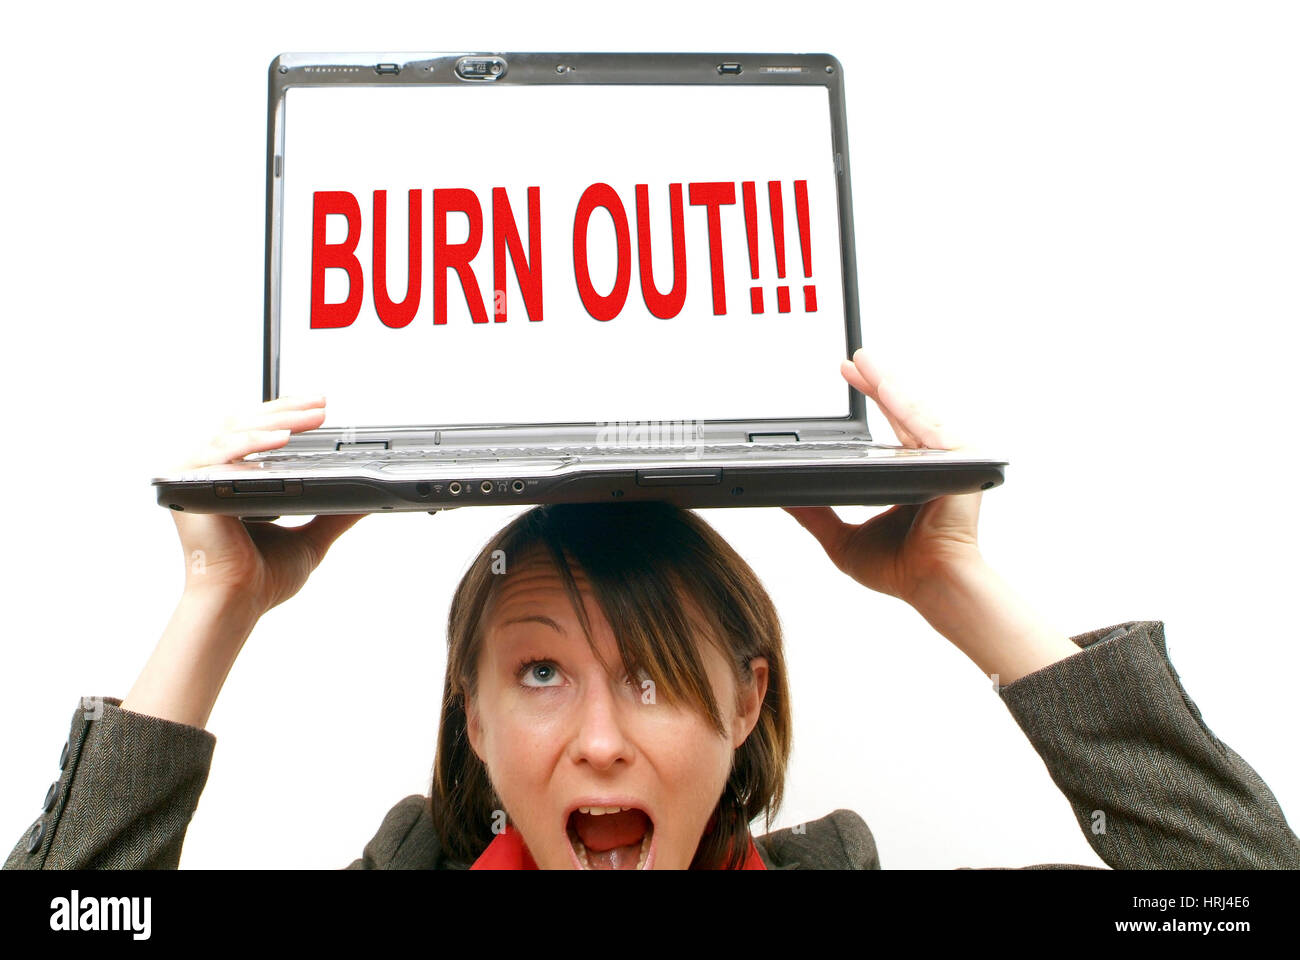 Gesch?ftsfrau mit Laptop am Kopf, Symbolbild Burn Out - donna d'affari con computer portatile sulla testa, simbolico per Burn-Out Foto Stock